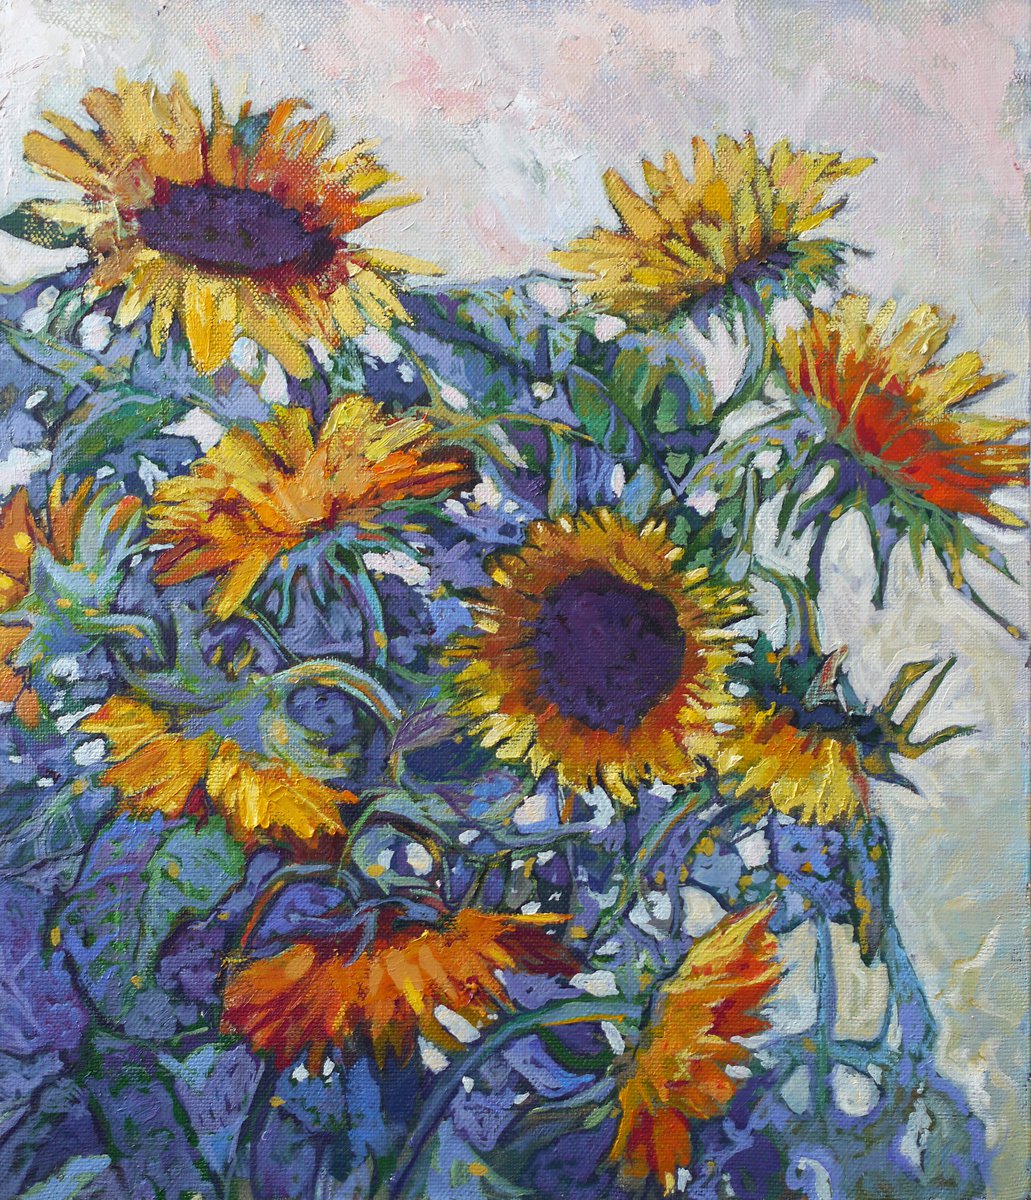 Sunflowers by Olga Rikun